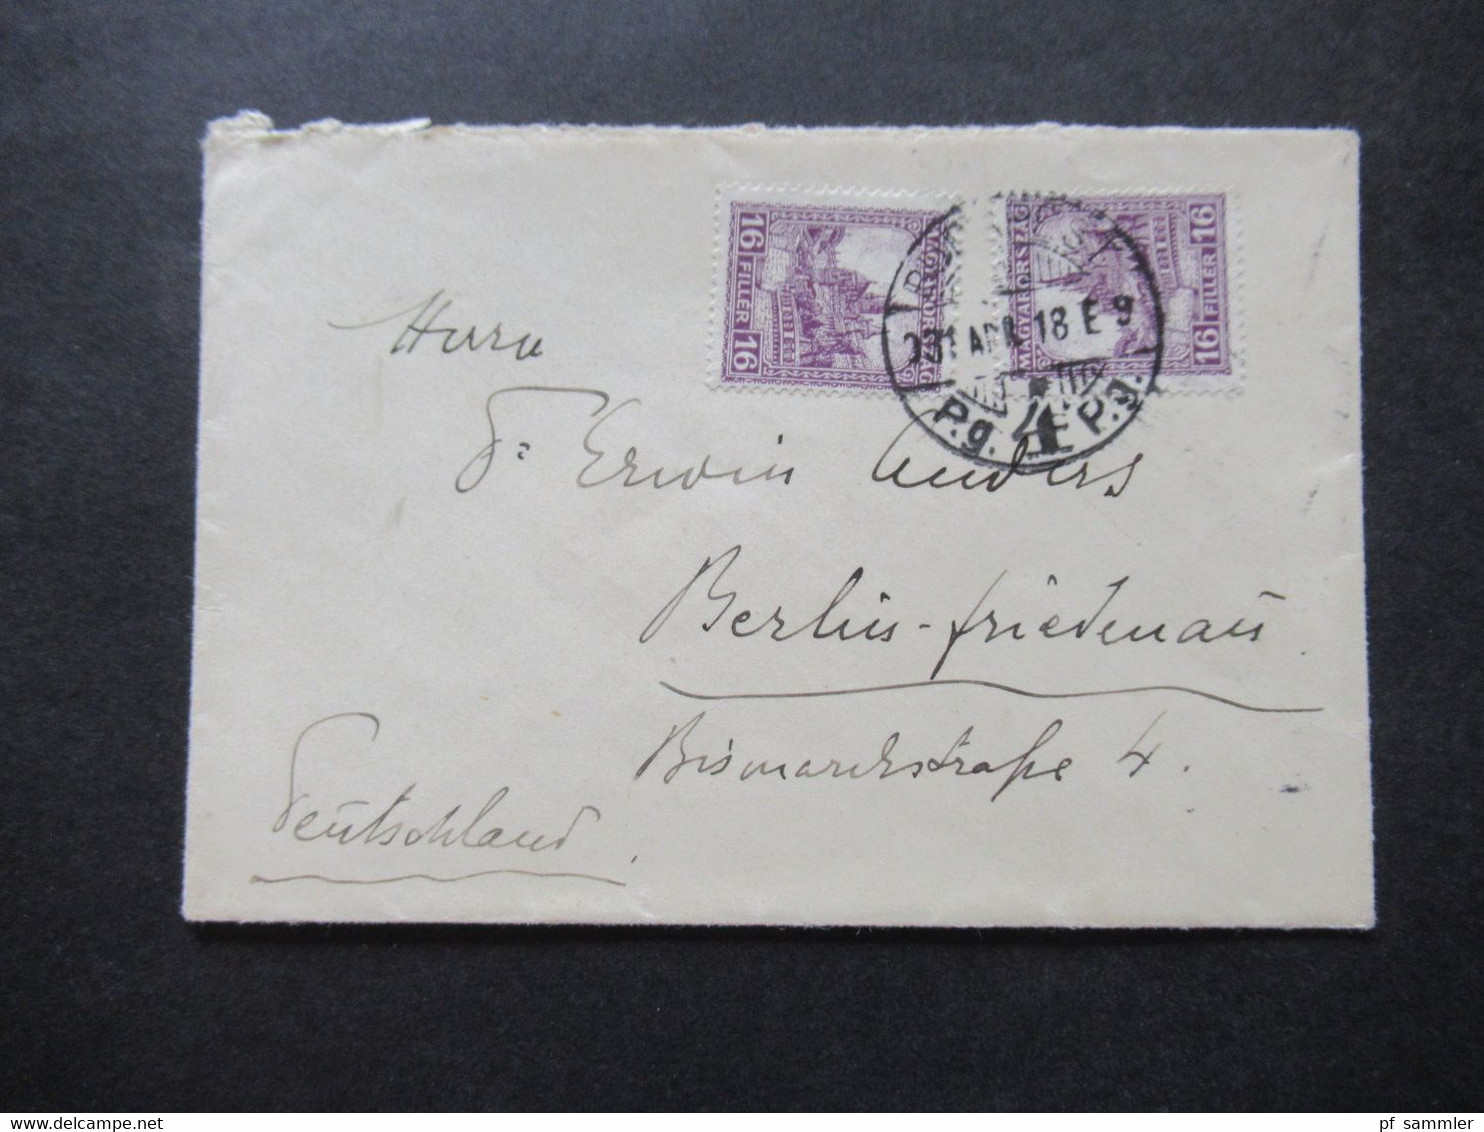 Ungarn 1923 Budapest - Berlin Friedenau Absender Oberlandesgerichtsrat F. Goldmann 2 Belege - Lettres & Documents